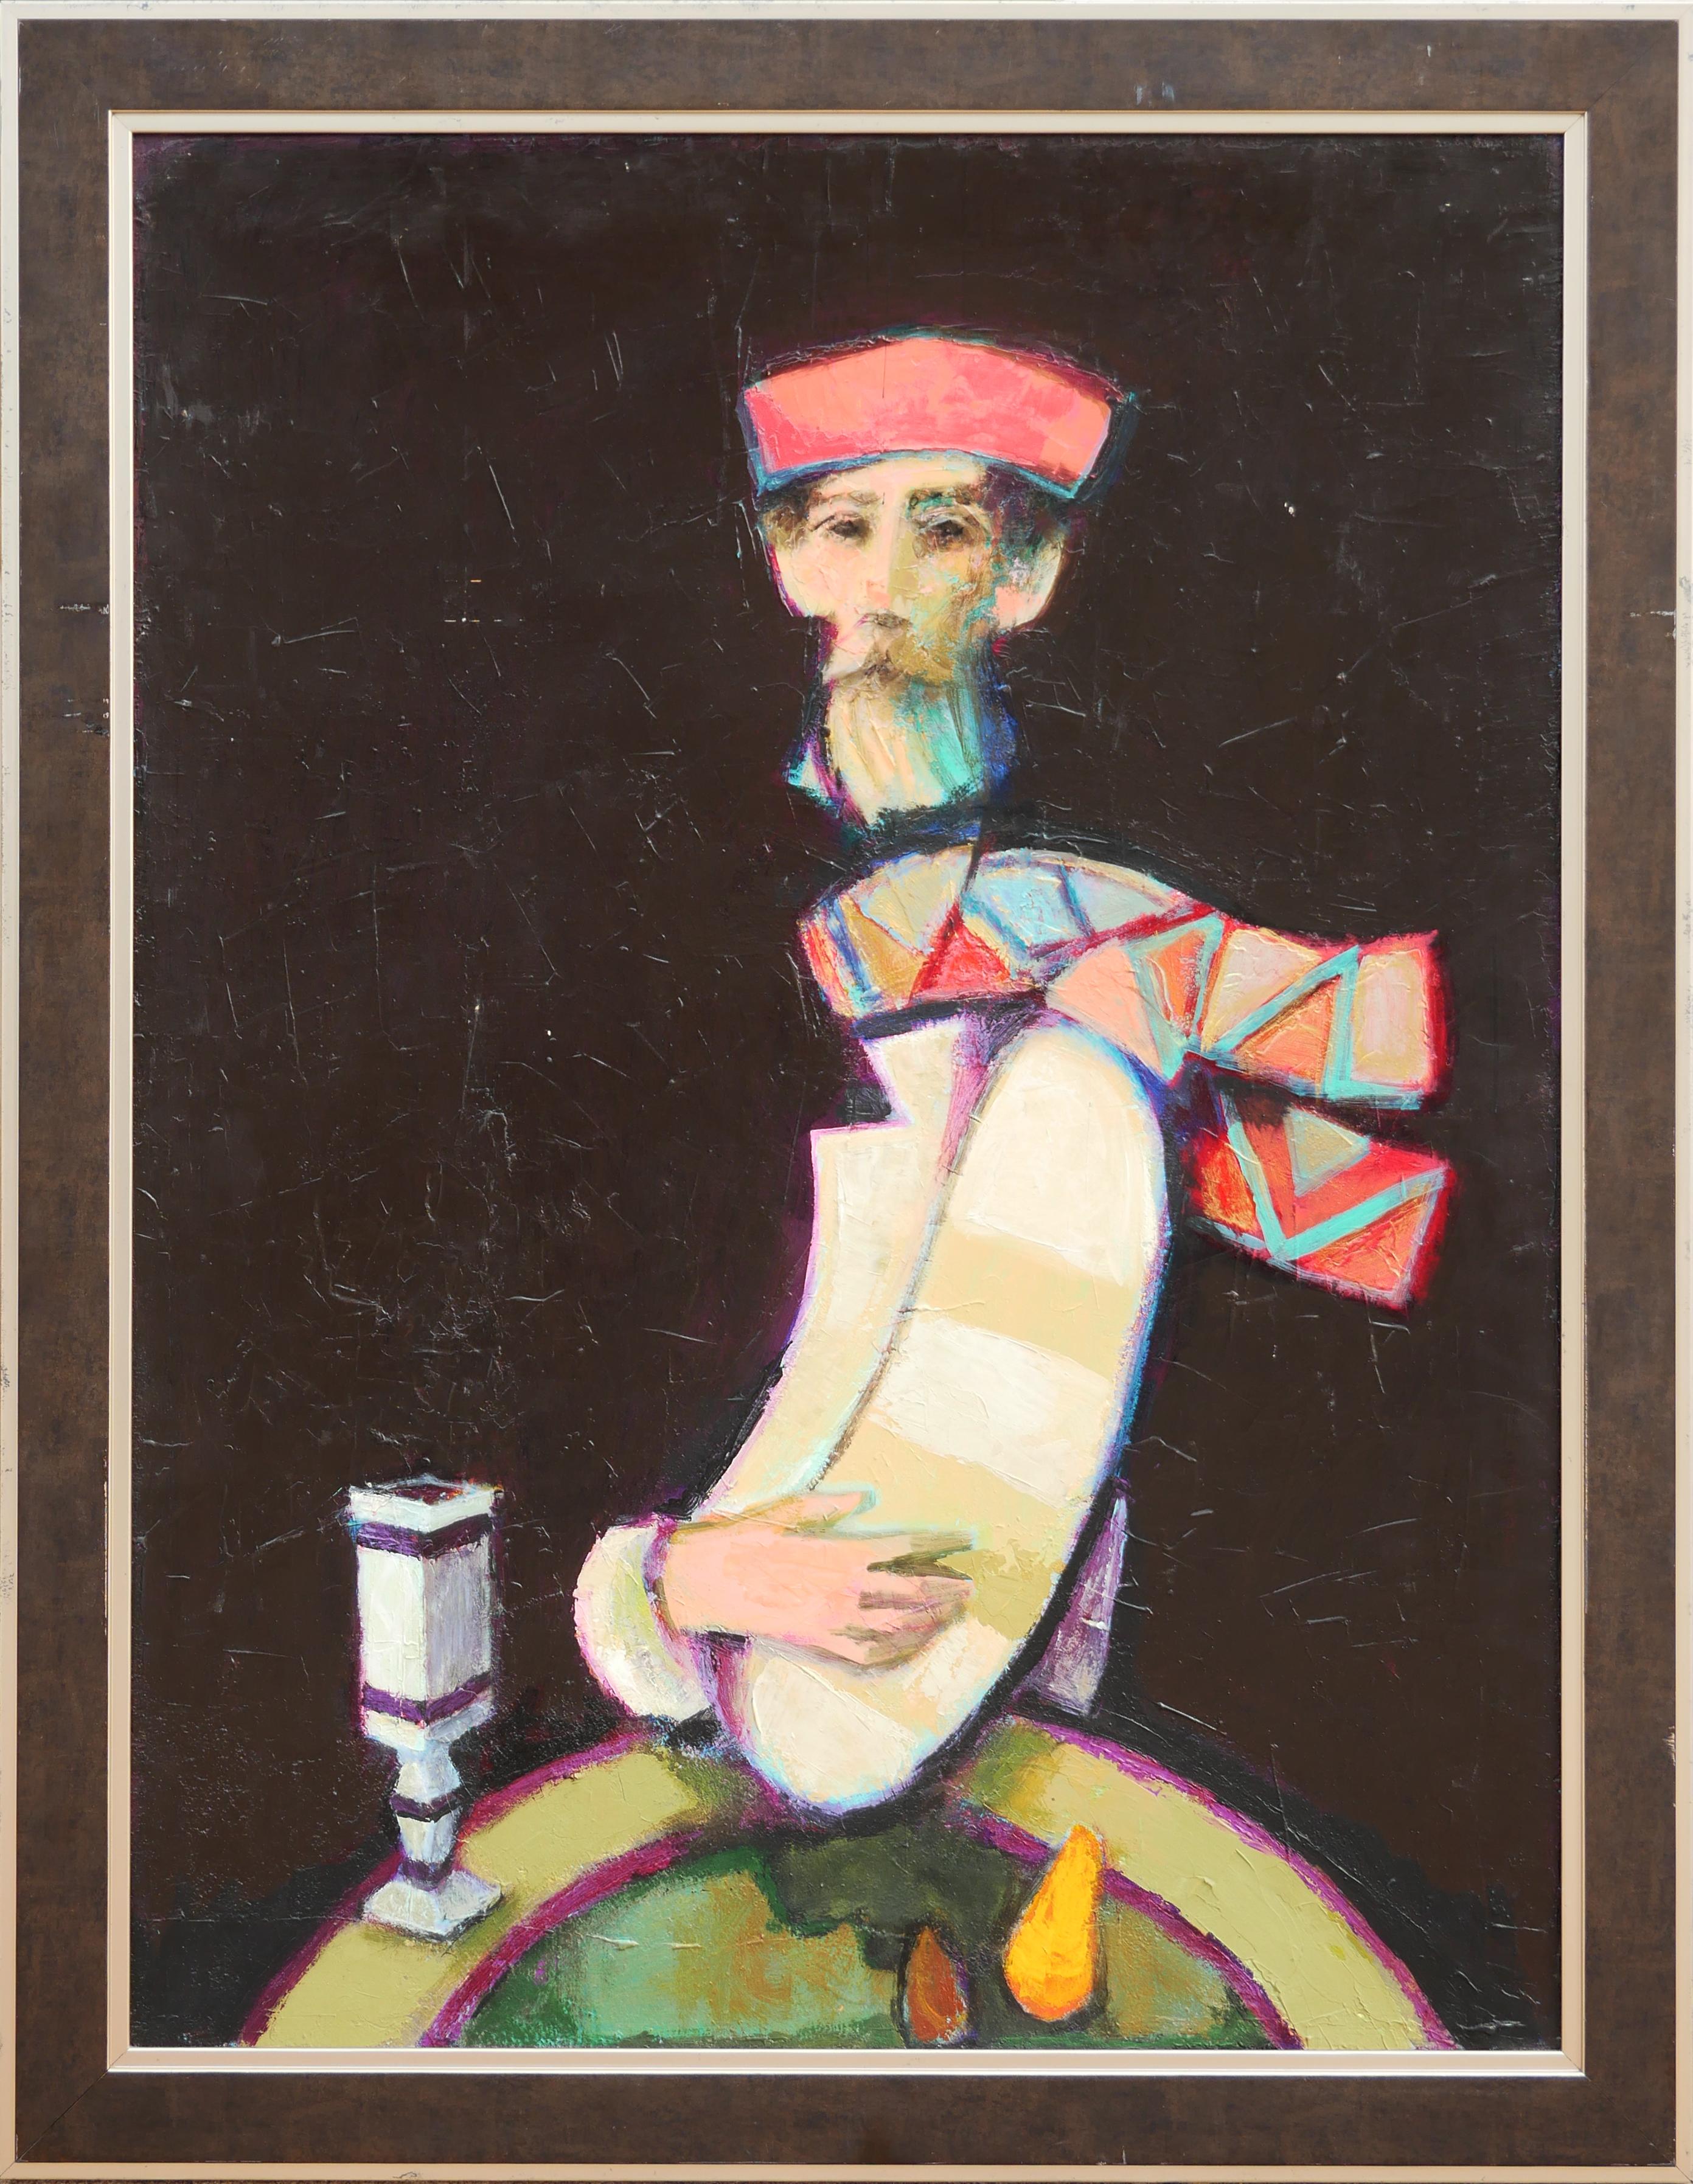 David Adickes Portrait Painting – „Man mit rotem Hut und hellgrünen Streifenhemd“ Modernes abstraktes Porträtgemälde 